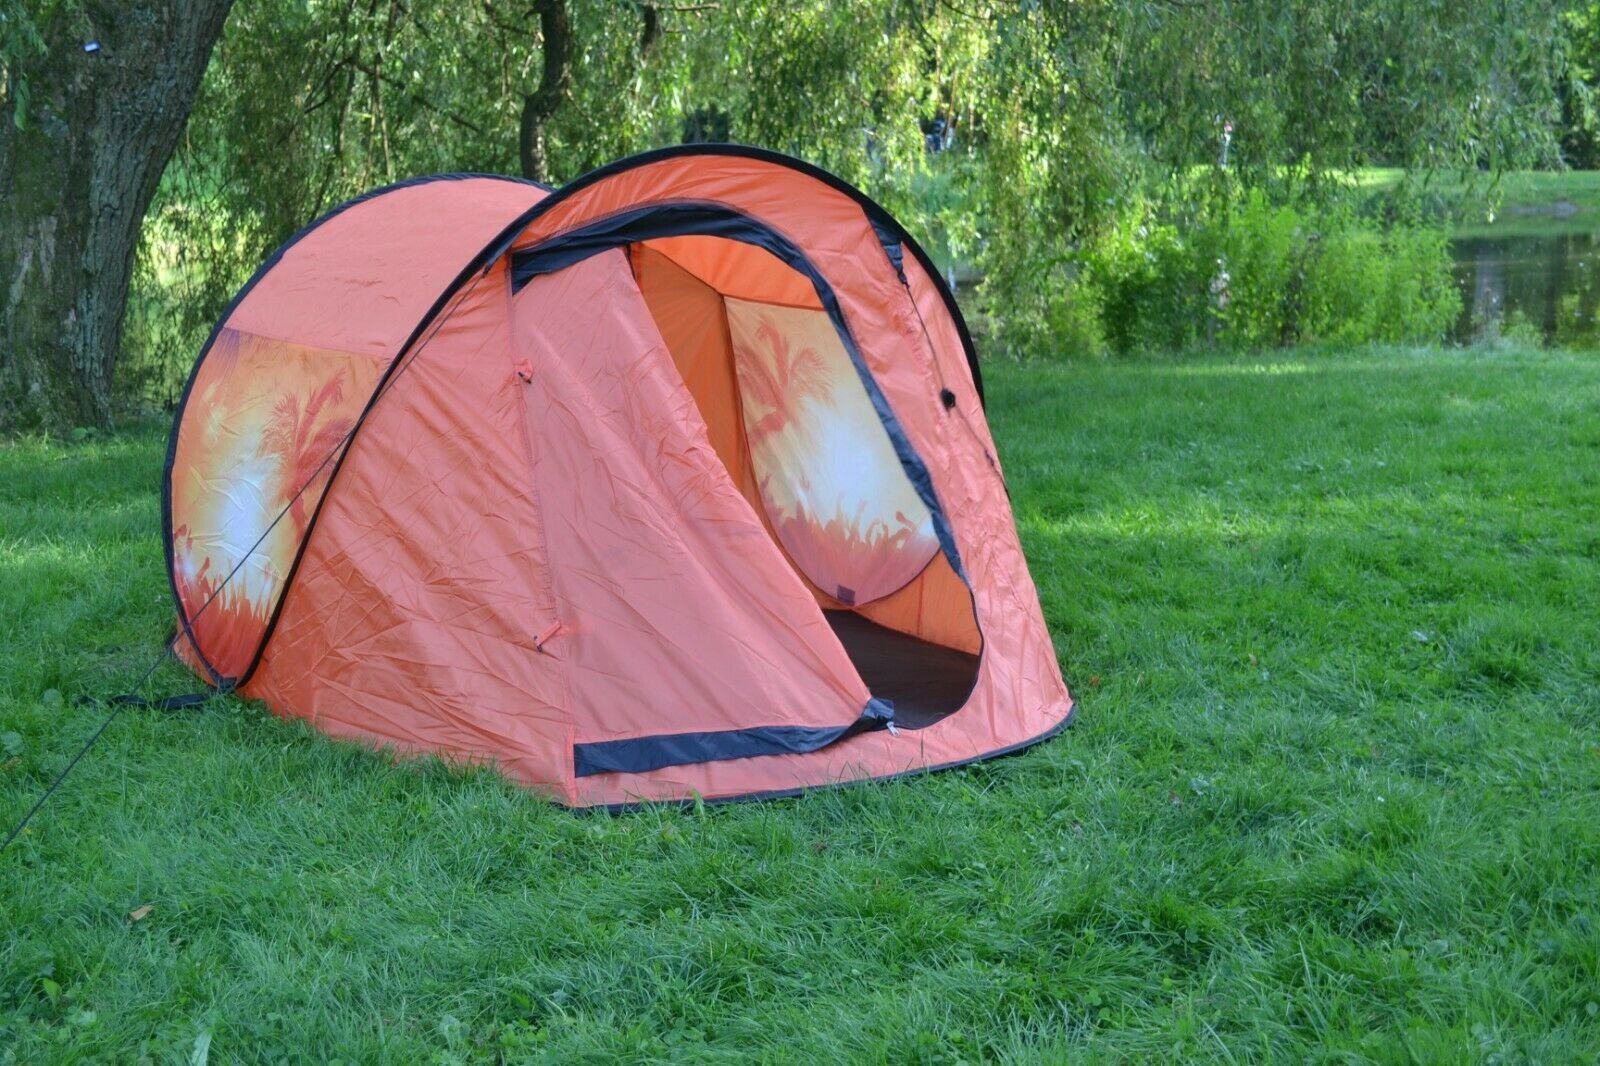 Wurfzelt Zelt Herringe & Up 2-3 Tent Outdoor Personen: Campingzelt 245x145x110cm orange Defactoshop Seile, Wurf Diverse Sekundenzelt Pop inkl. Person 20 Farben